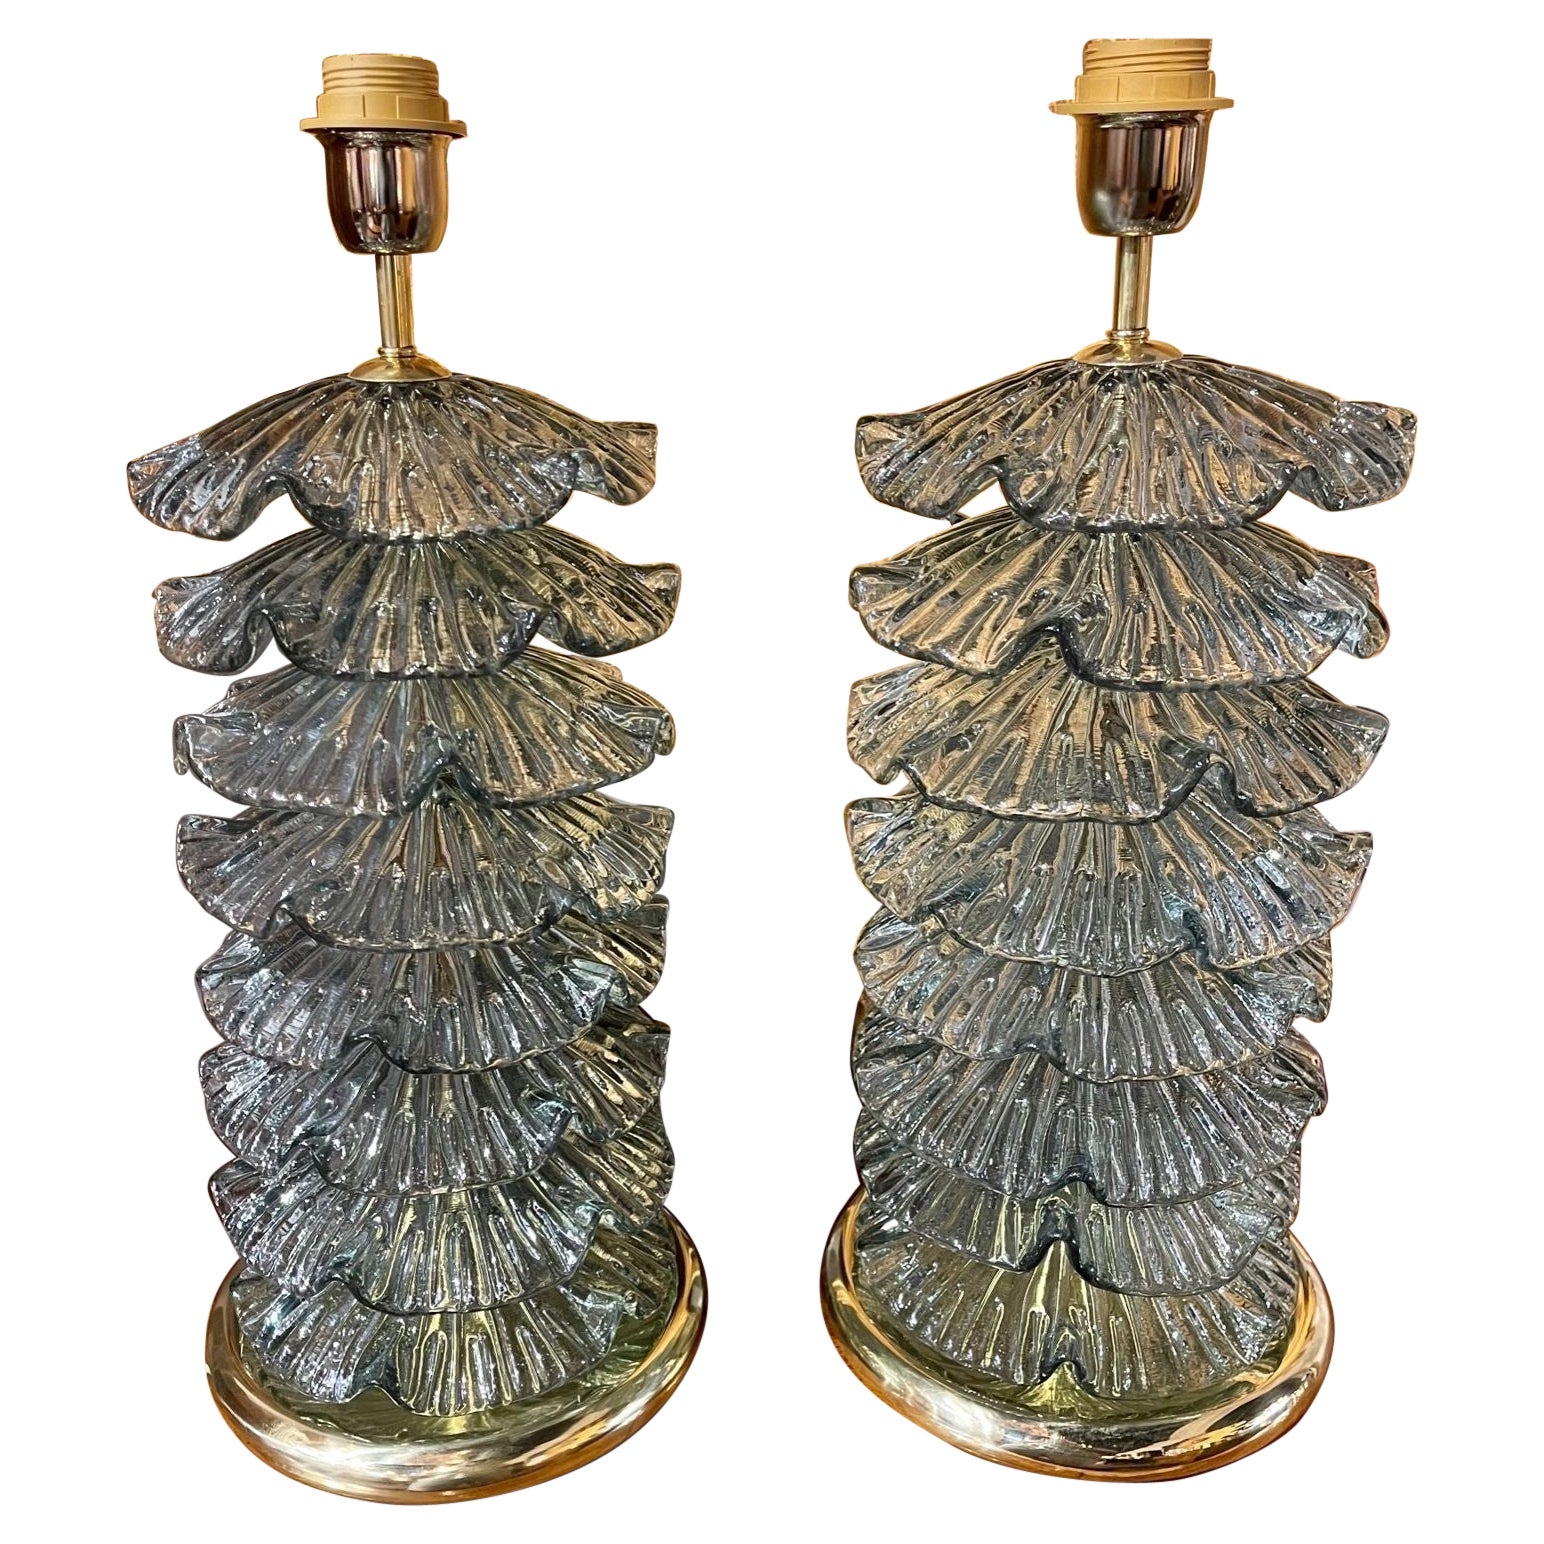 Pair of Modern Murano Ruffle Glass Lamps in Fontina Green